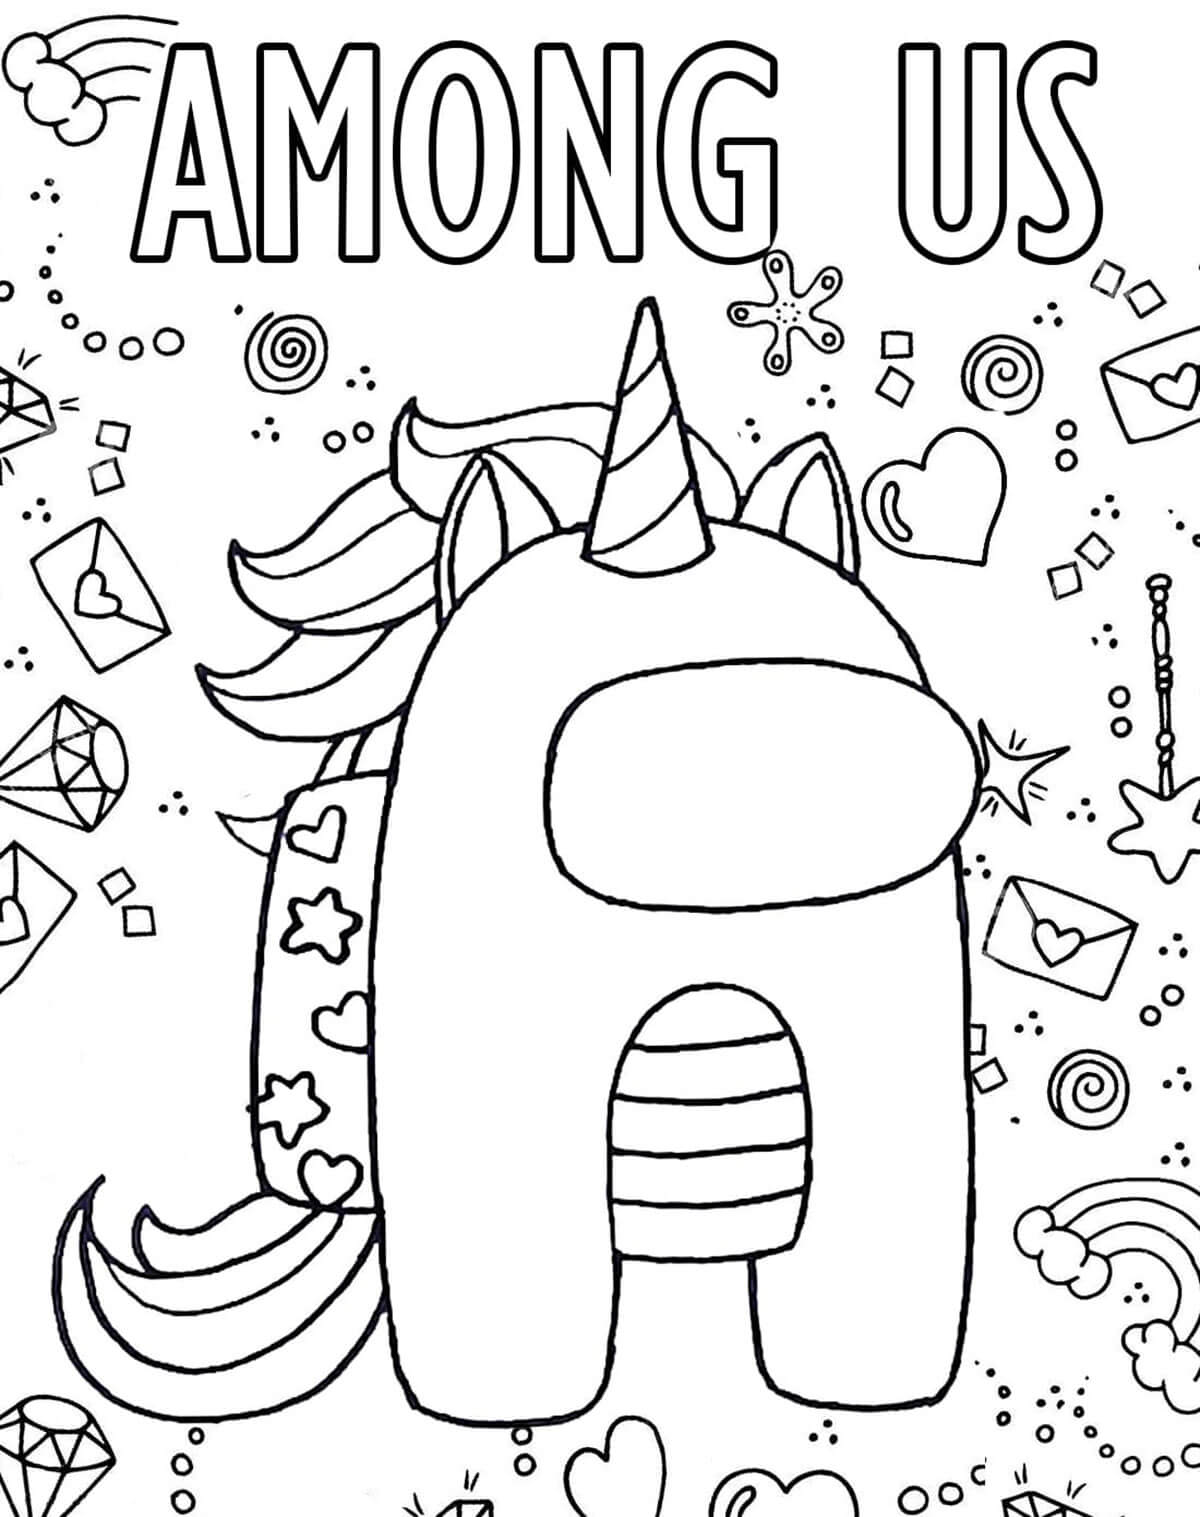 Among Us Unicorn Coloring Page